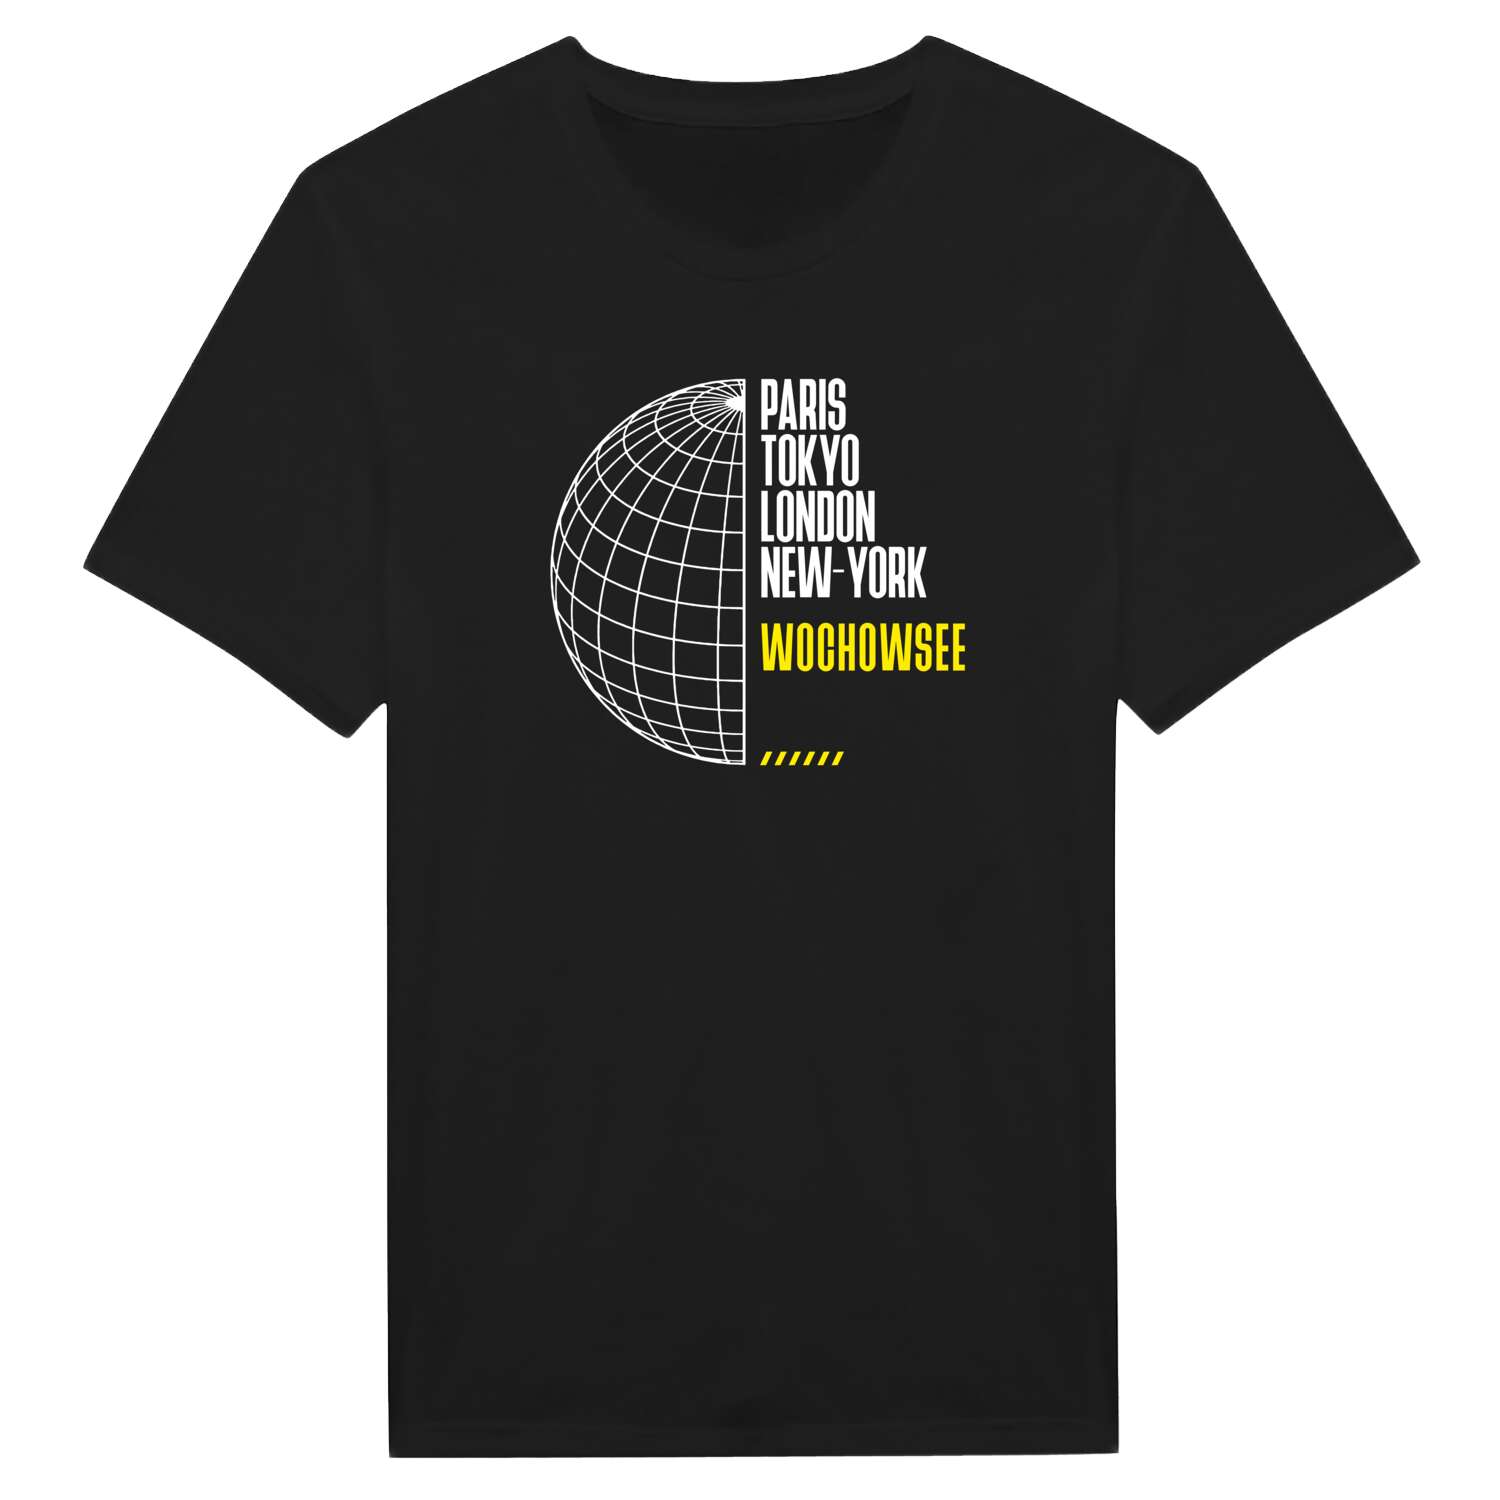 Wochowsee T-Shirt »Paris Tokyo London«